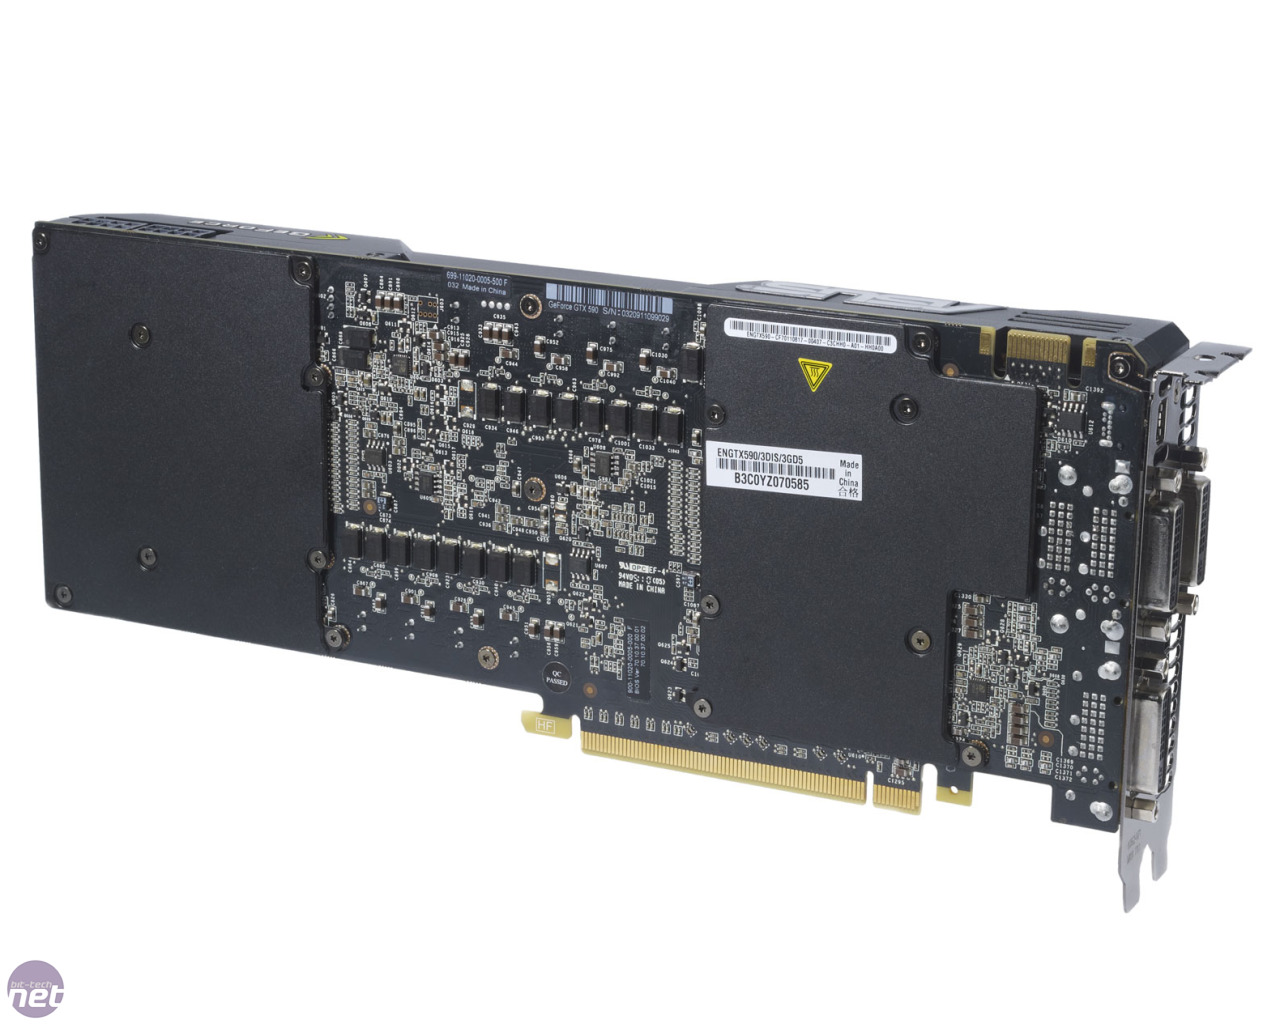 Nvidia GeForce GTX 590 3GB Review | bit 